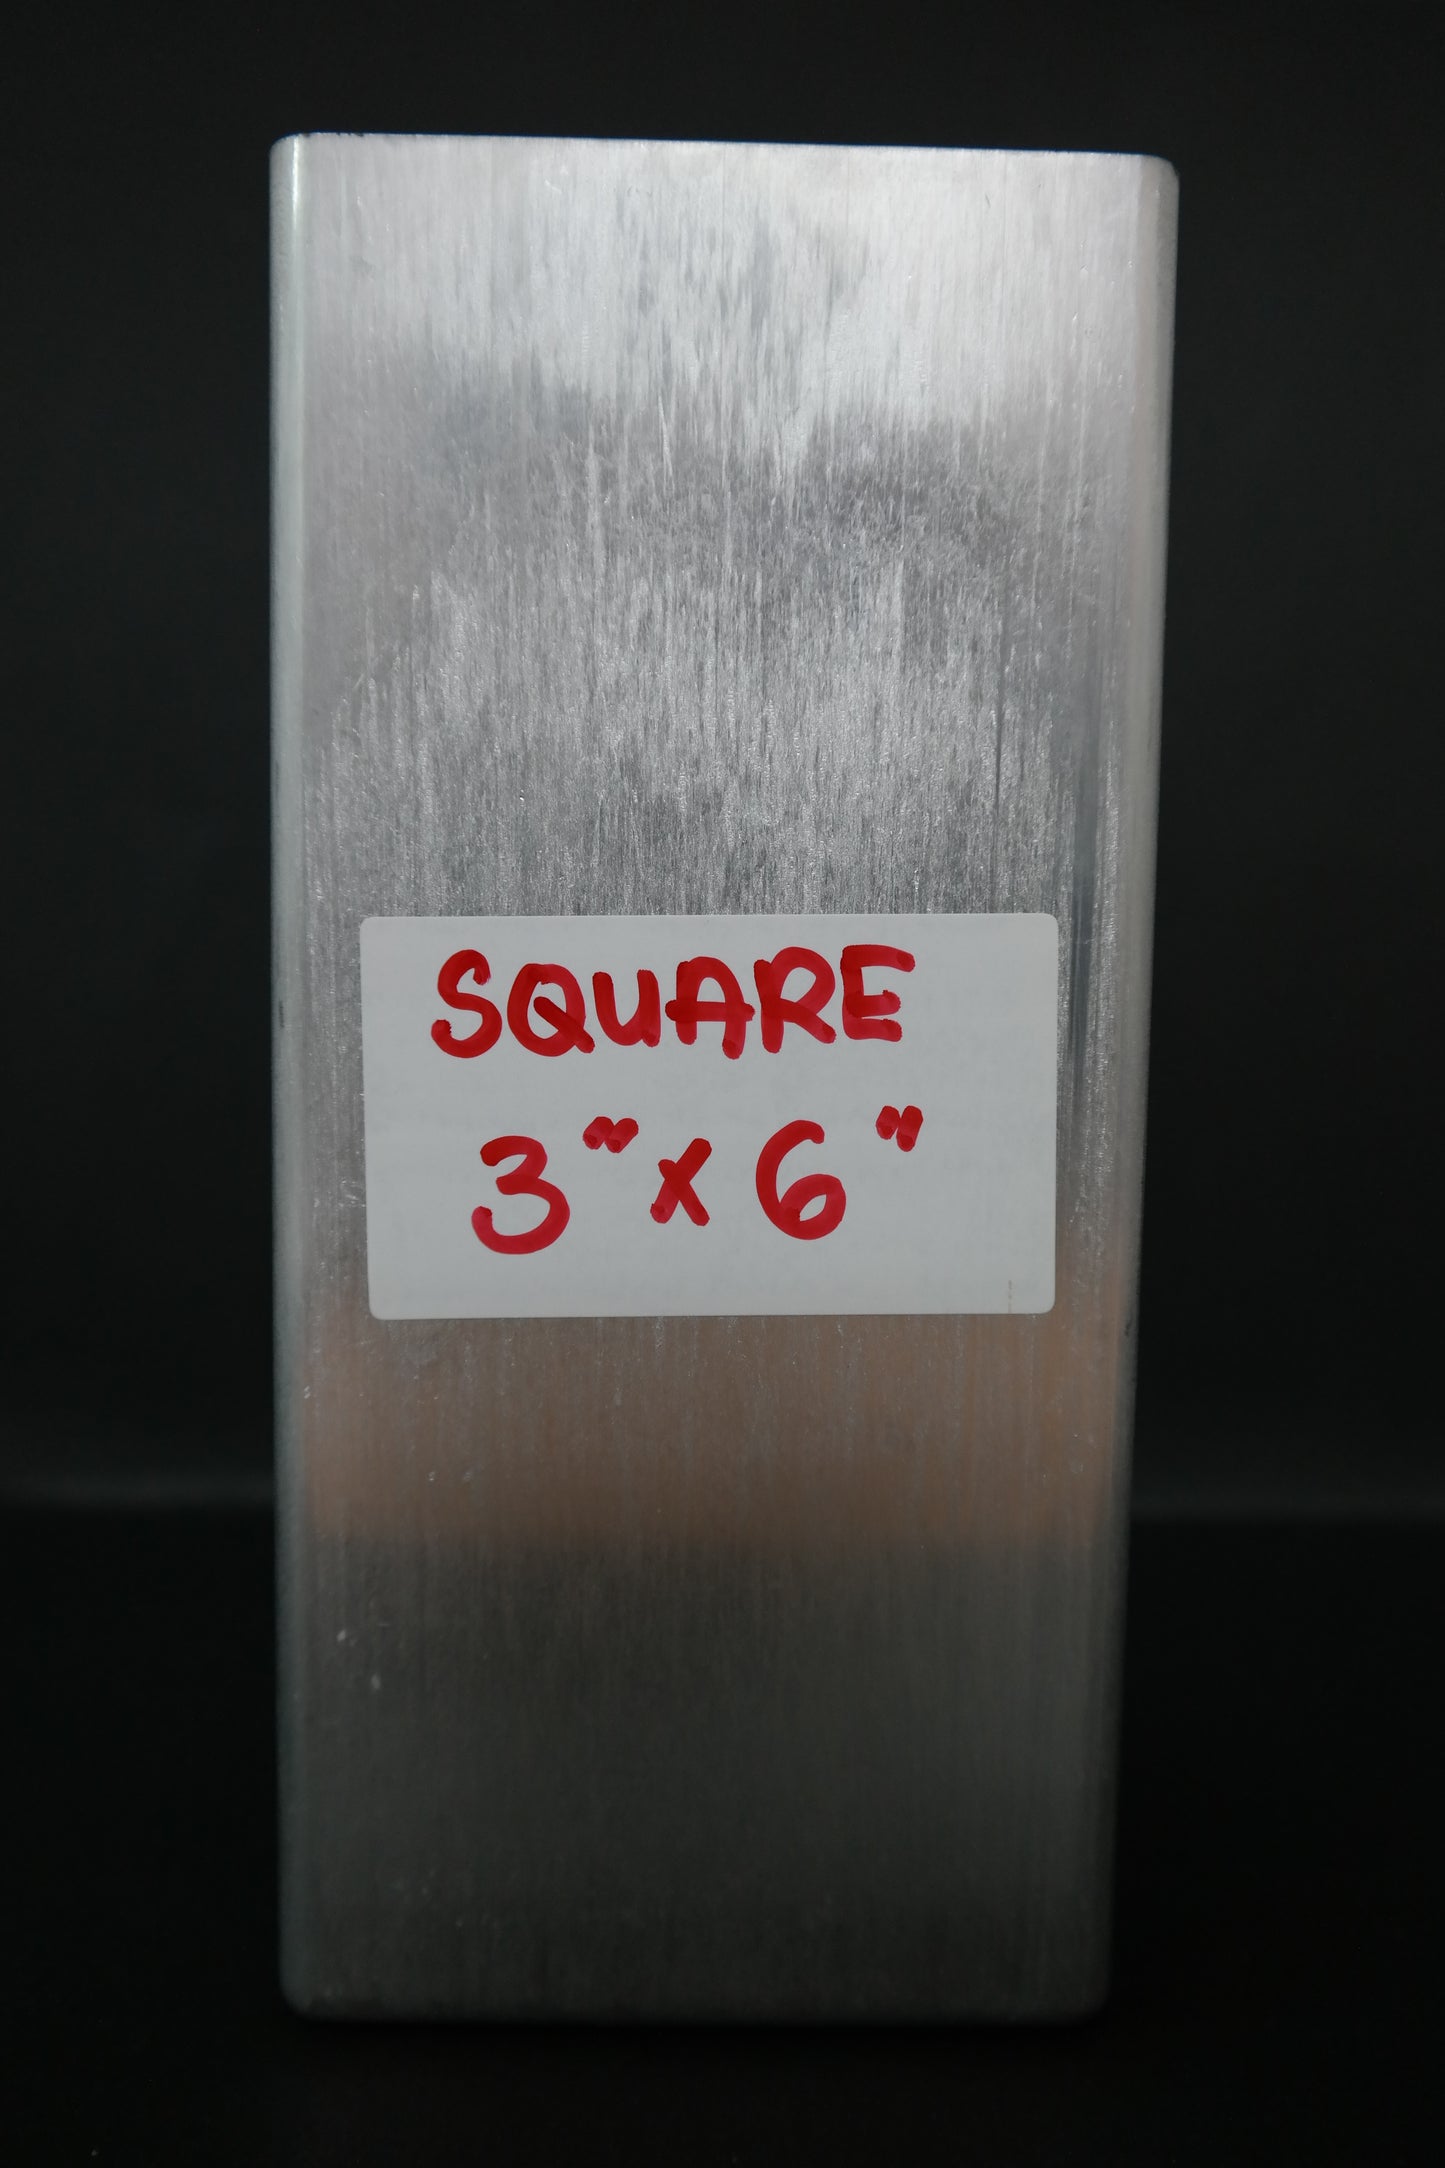 Square Aluminium Candle Mold